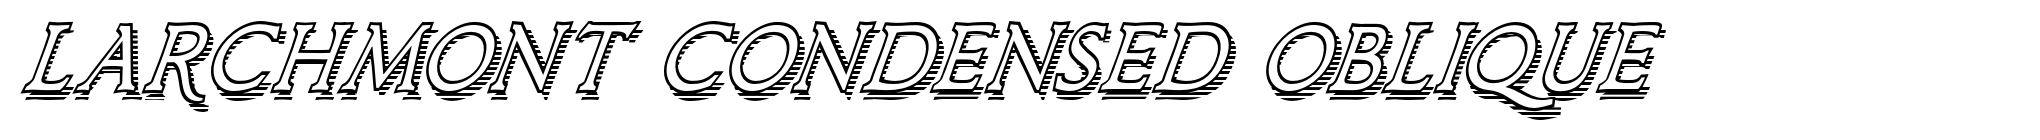 Larchmont Condensed Oblique image